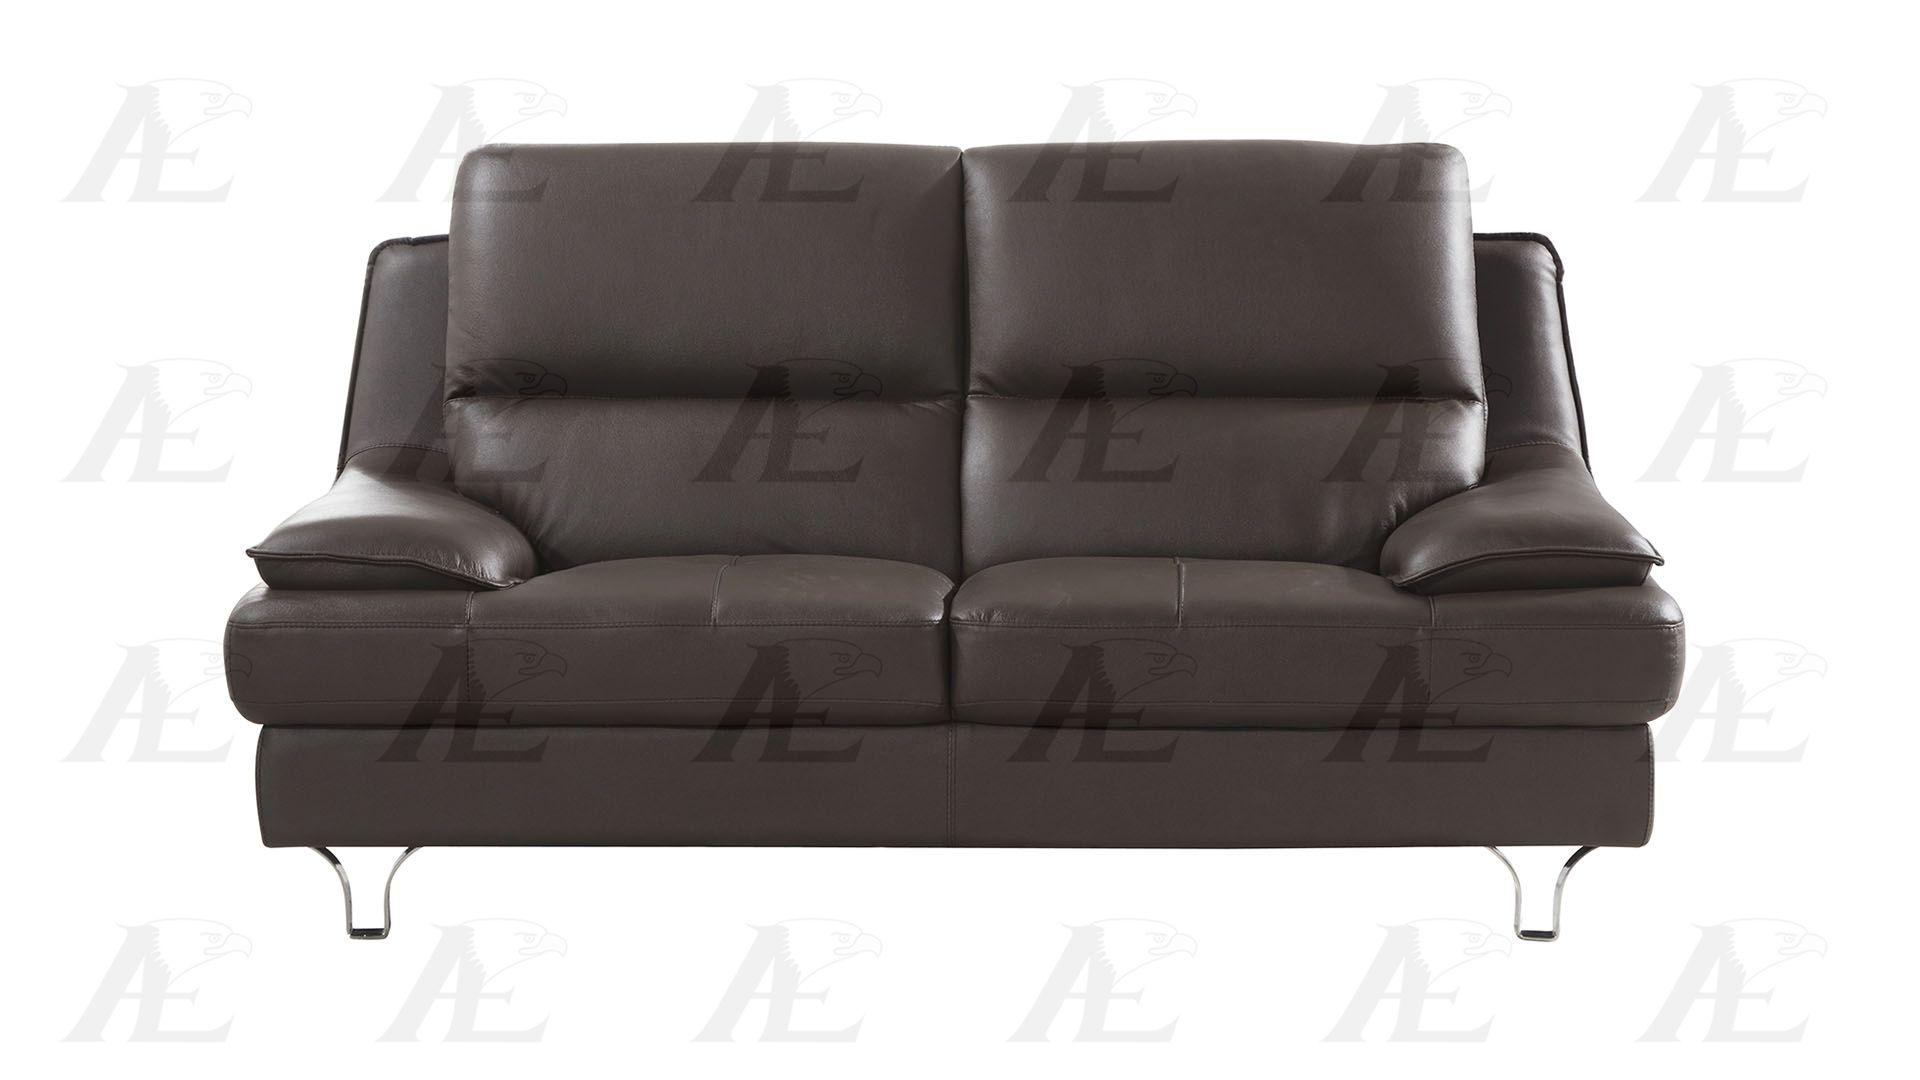 

    
EK-B109-DC-SET American Eagle Furniture Sofa Set
